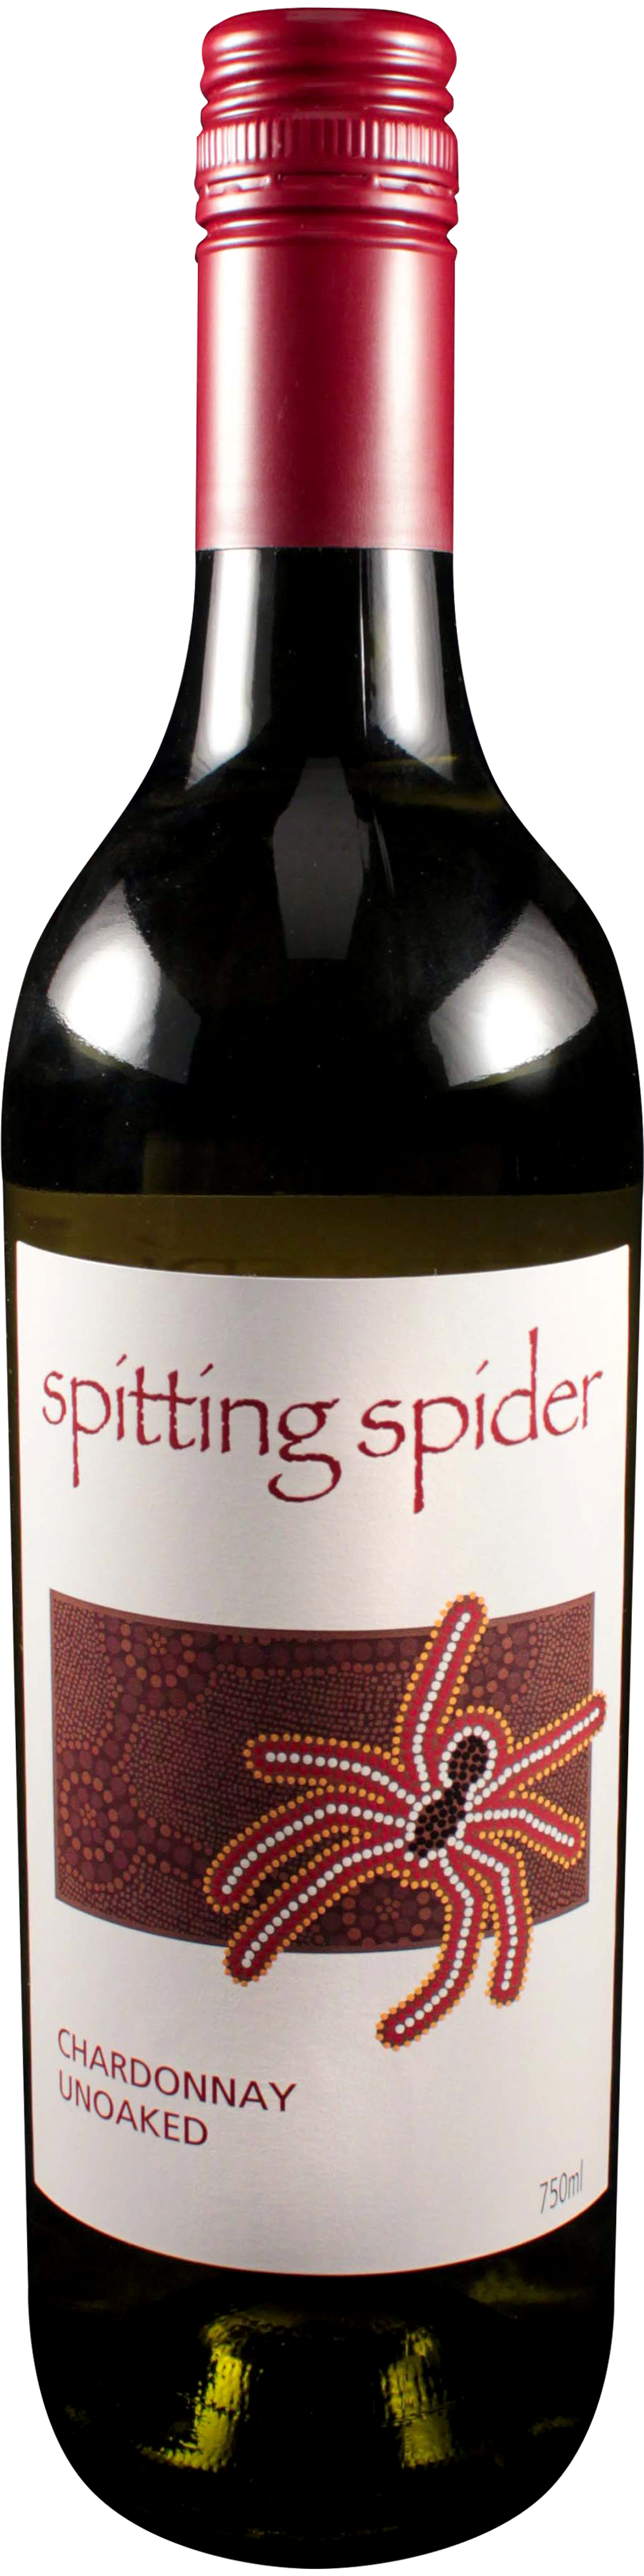 Bottle shot of 2011 Spitting Spider Chardonnay